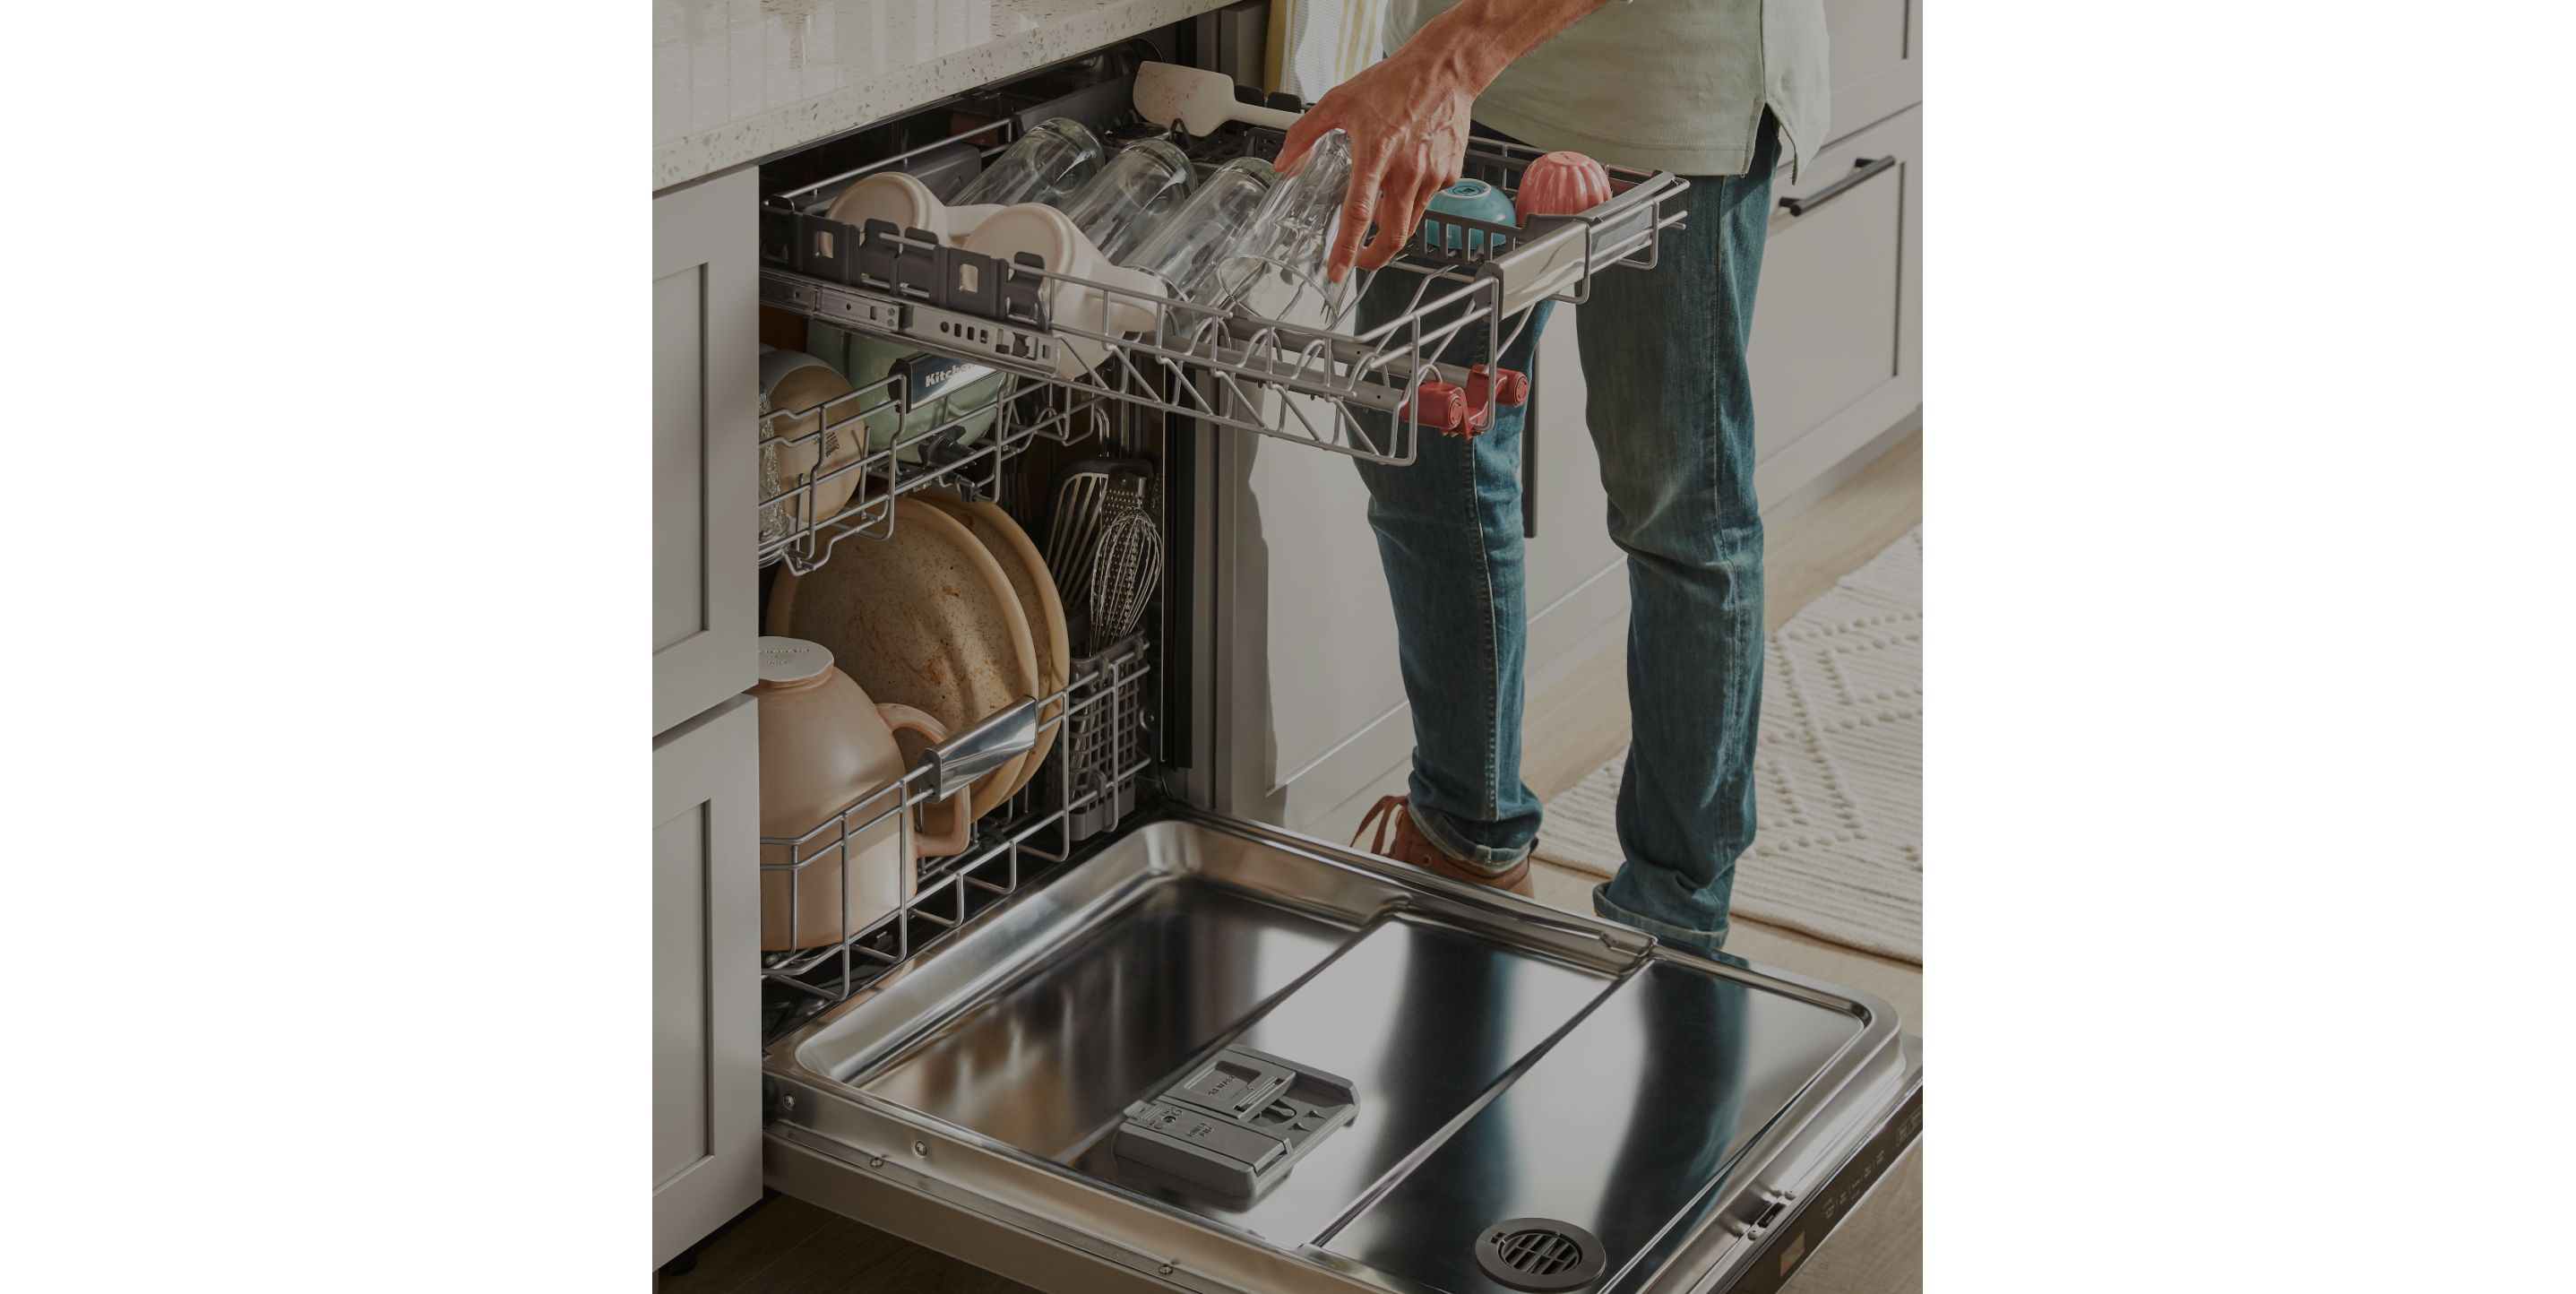 GE Slow Cooker - appliances - by owner - sale - craigslist